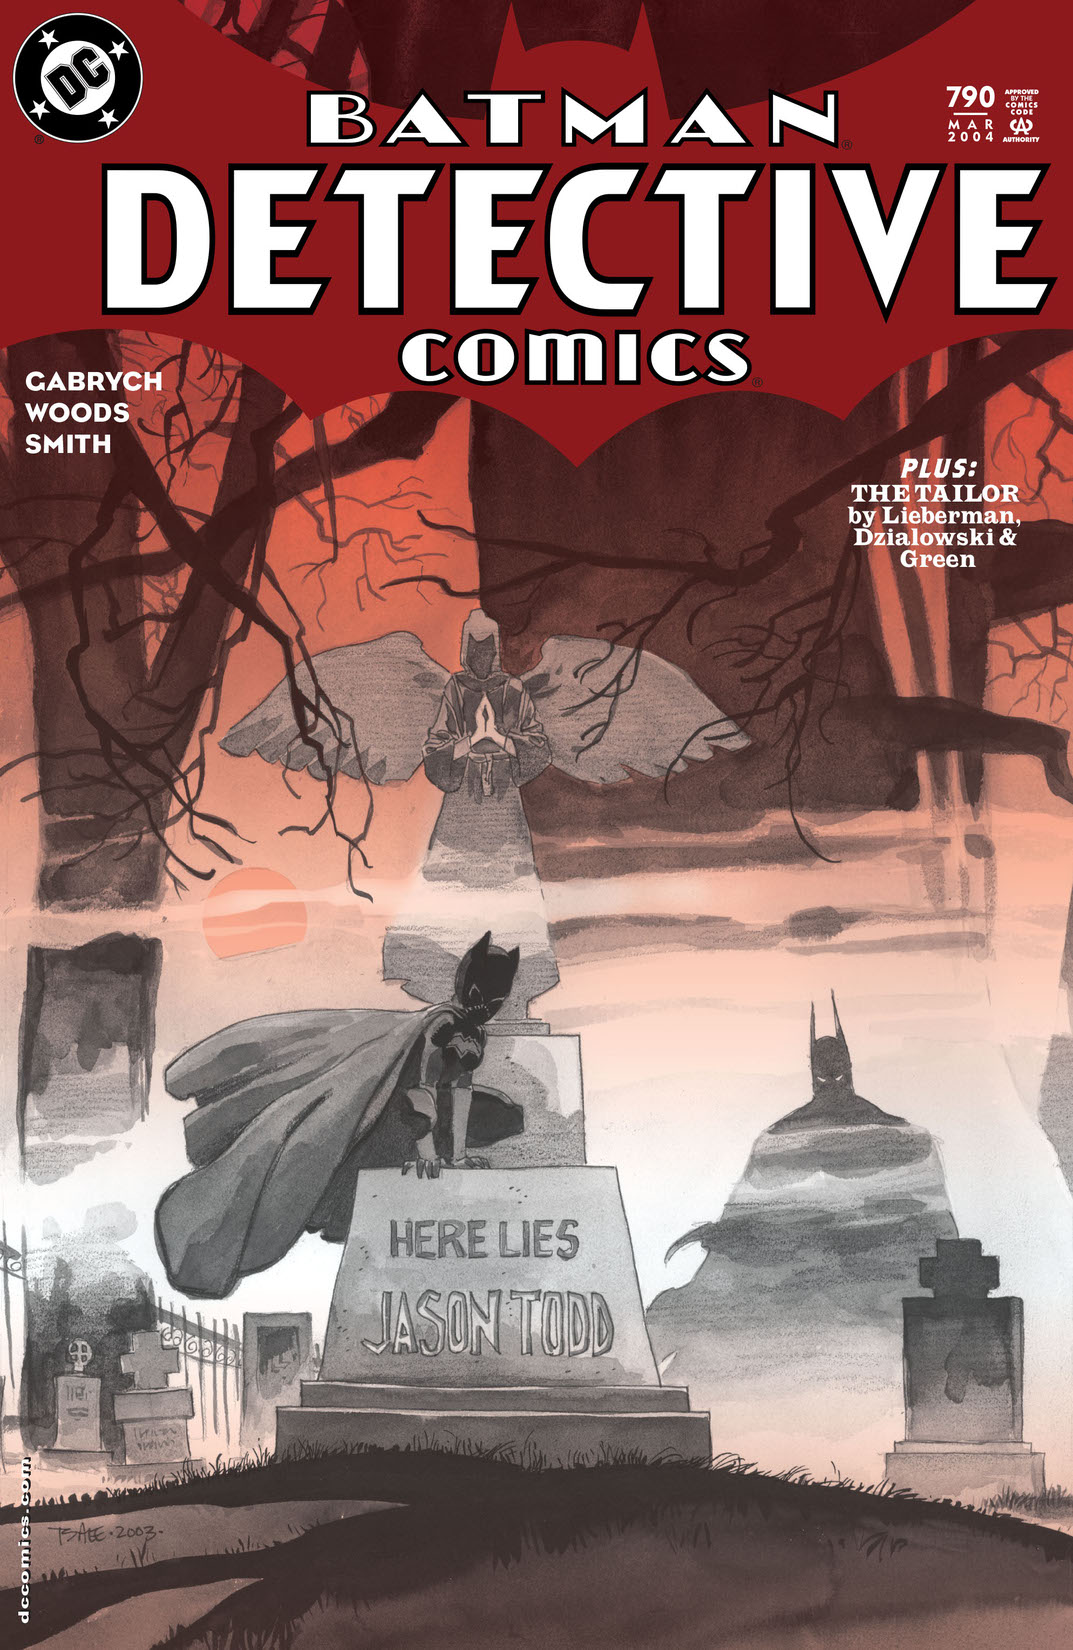 Detective Comics (1937-) #790 preview images